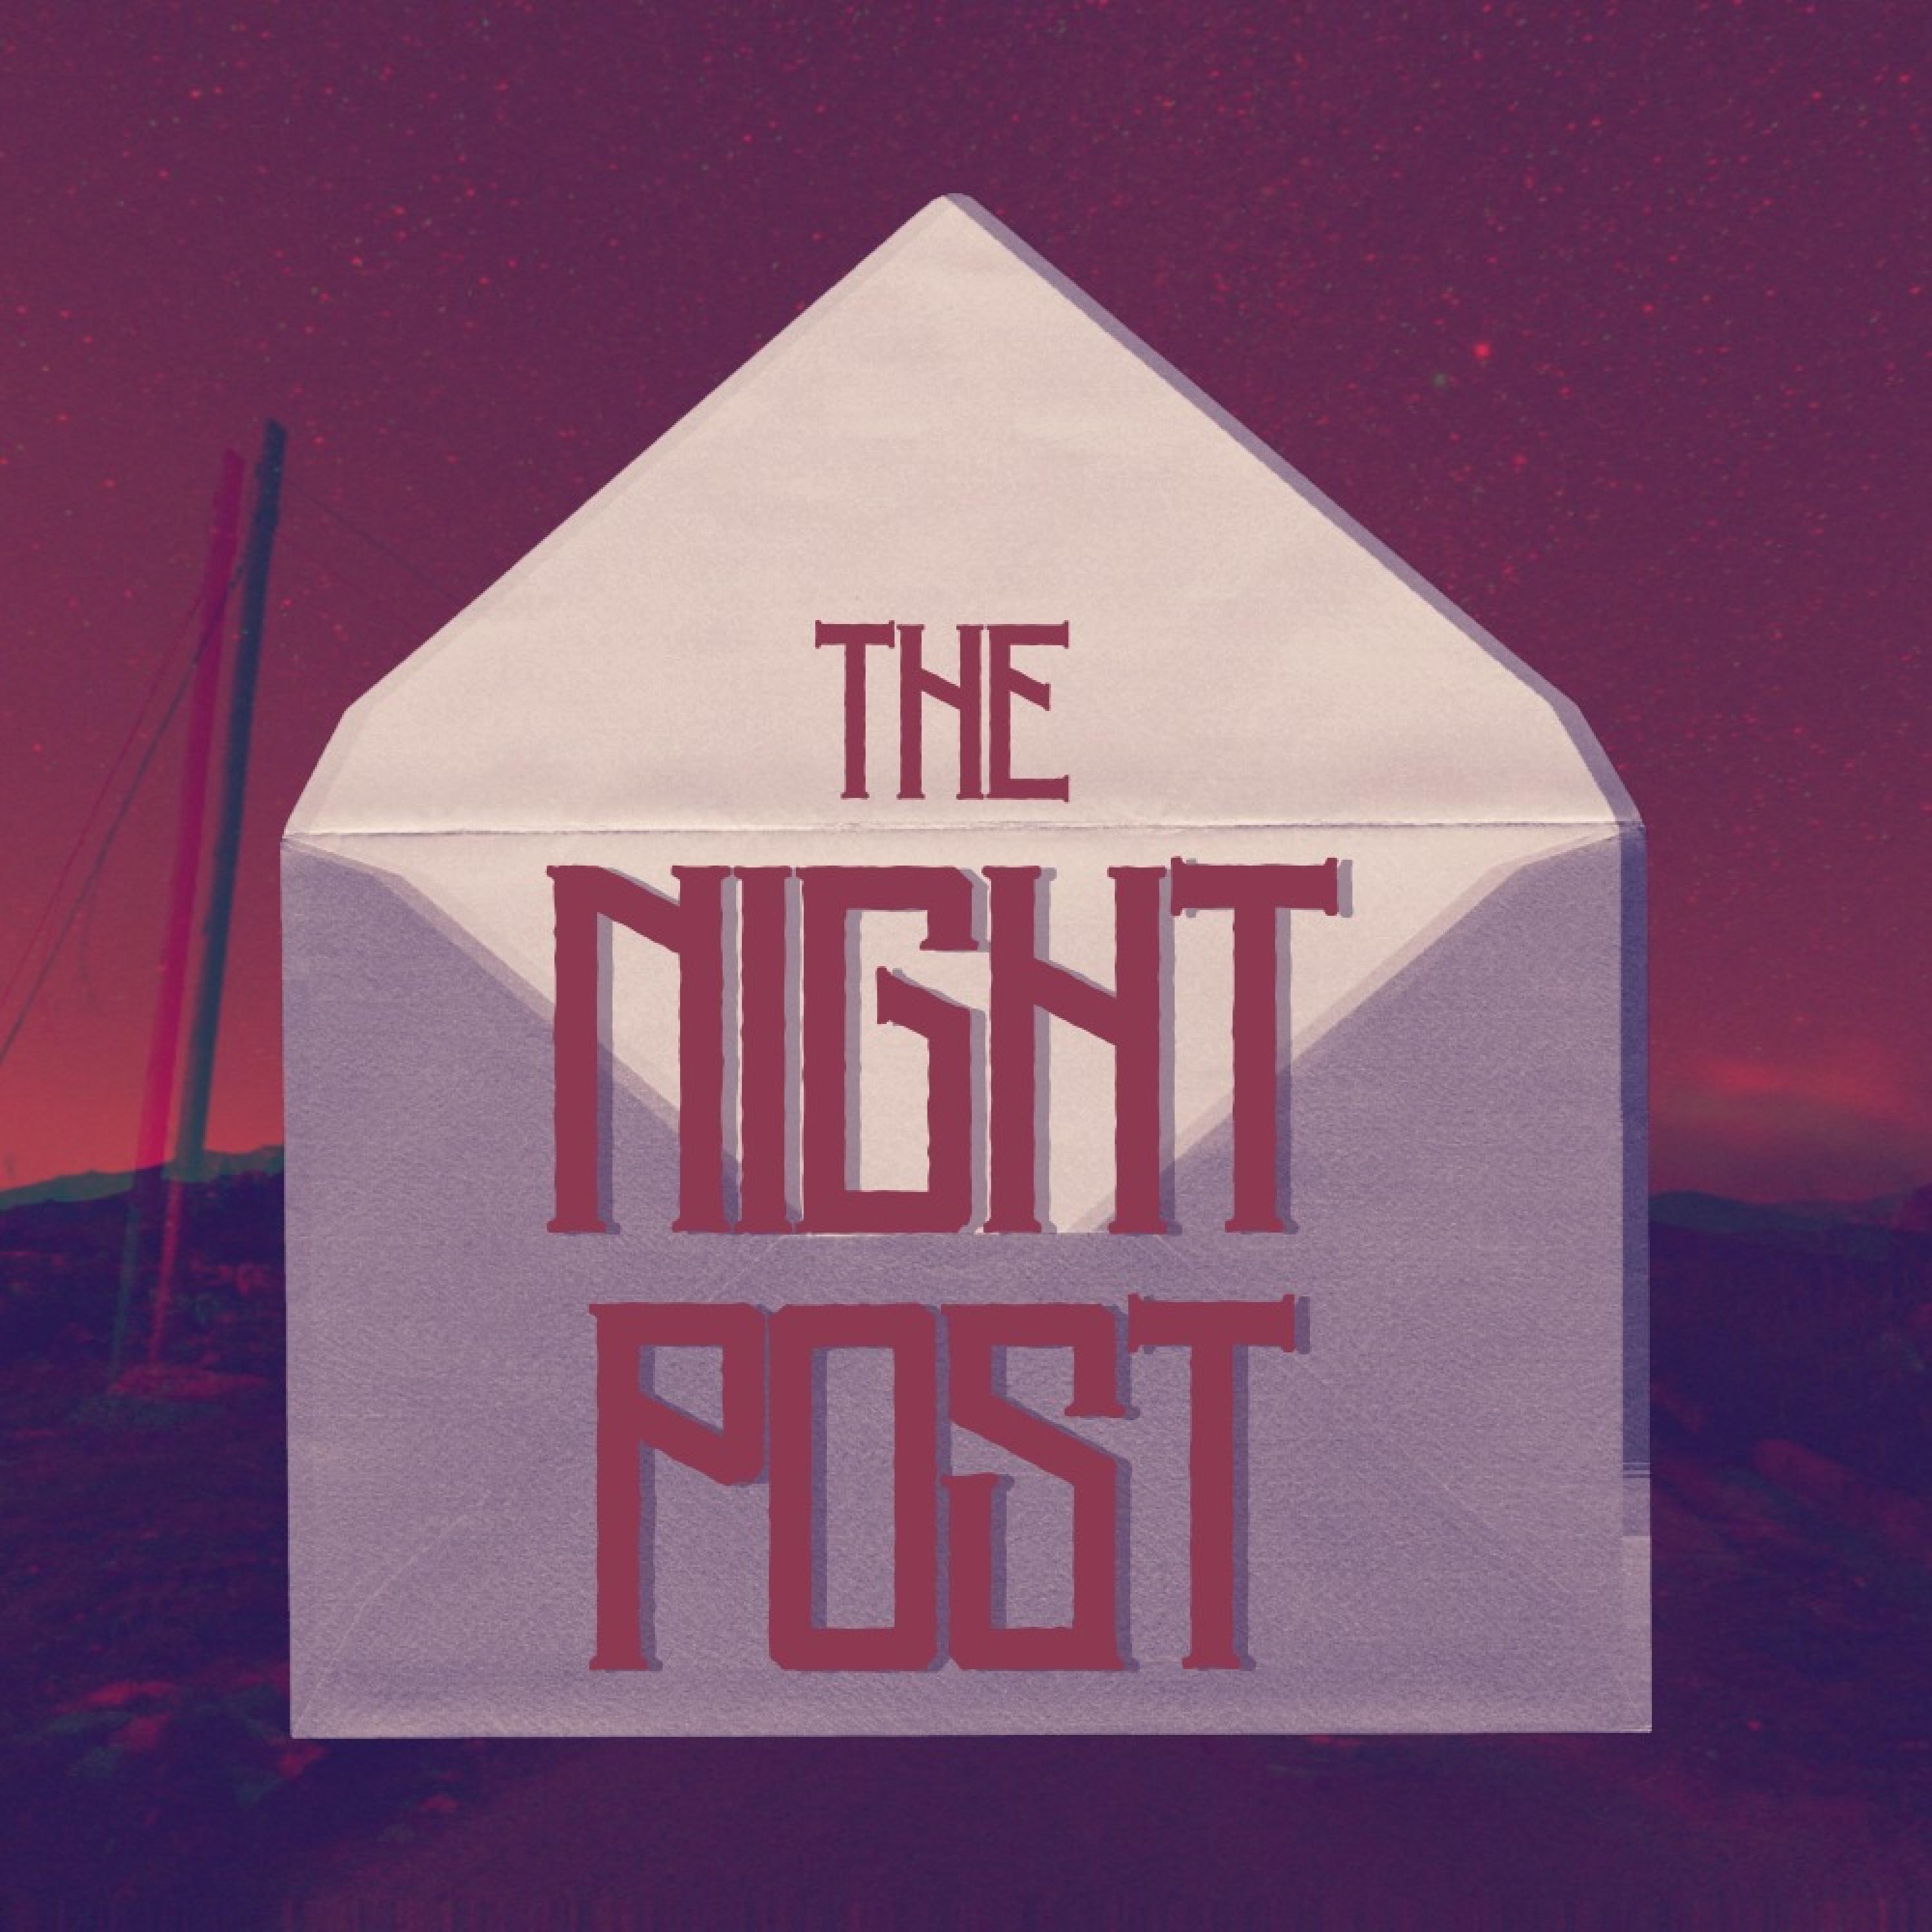 Podcast Post. Post night